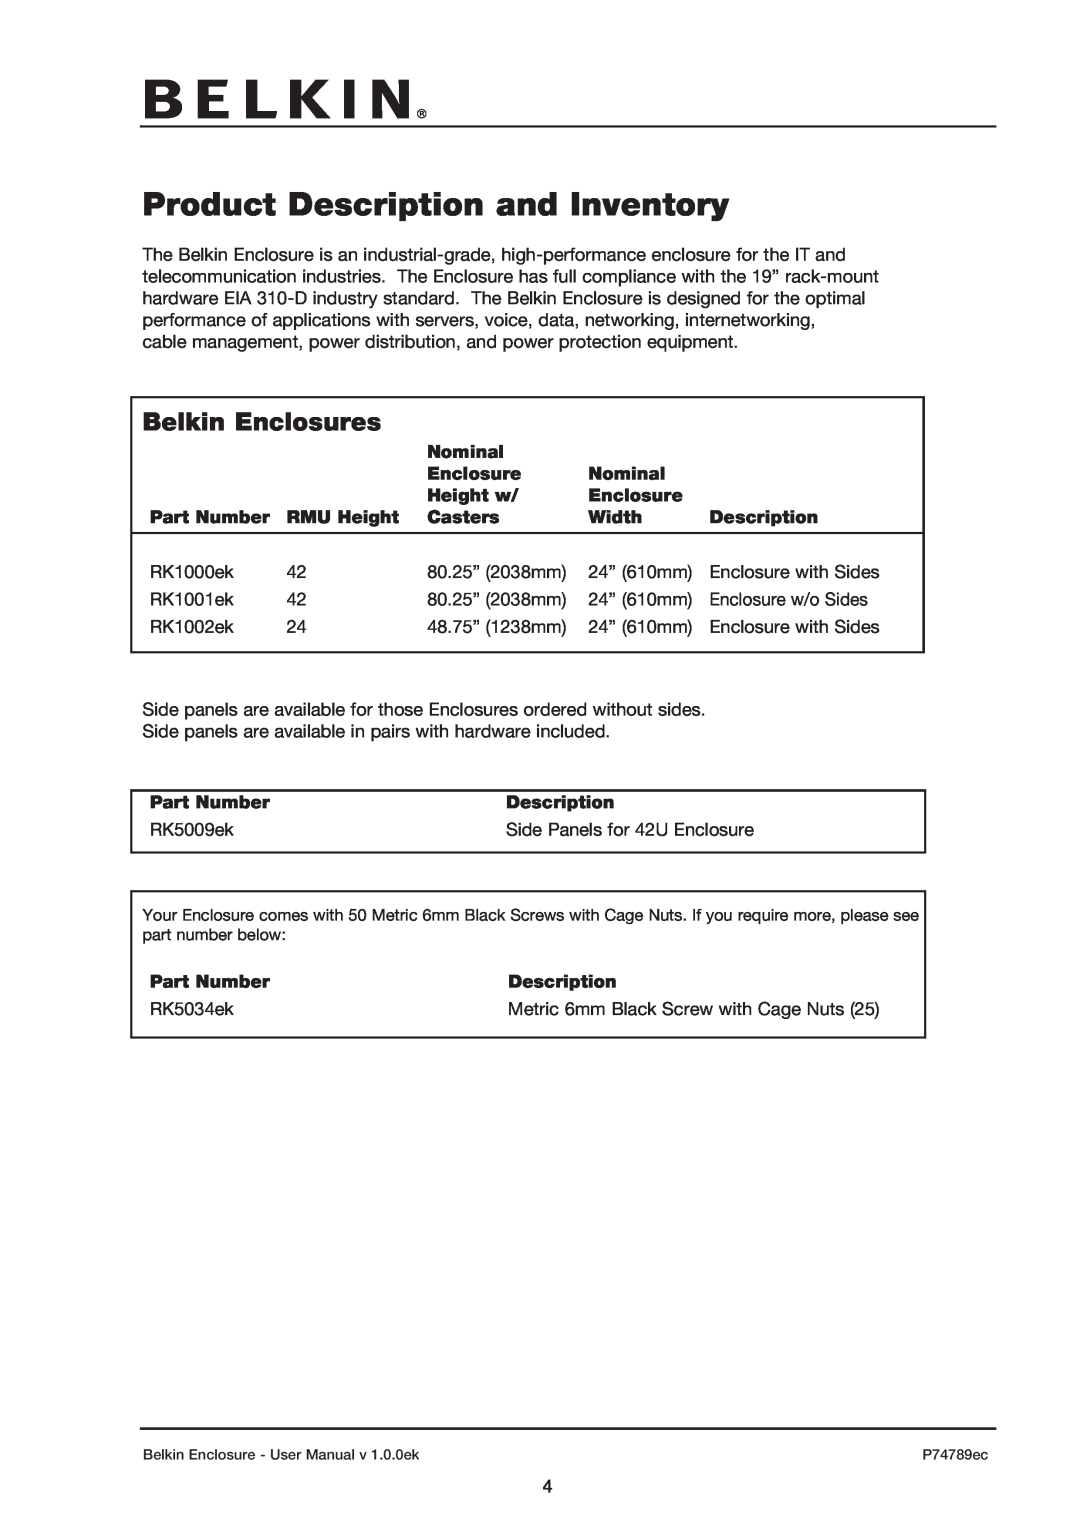 Belkin 42U user manual Product Description and Inventory, Belkin Enclosures 